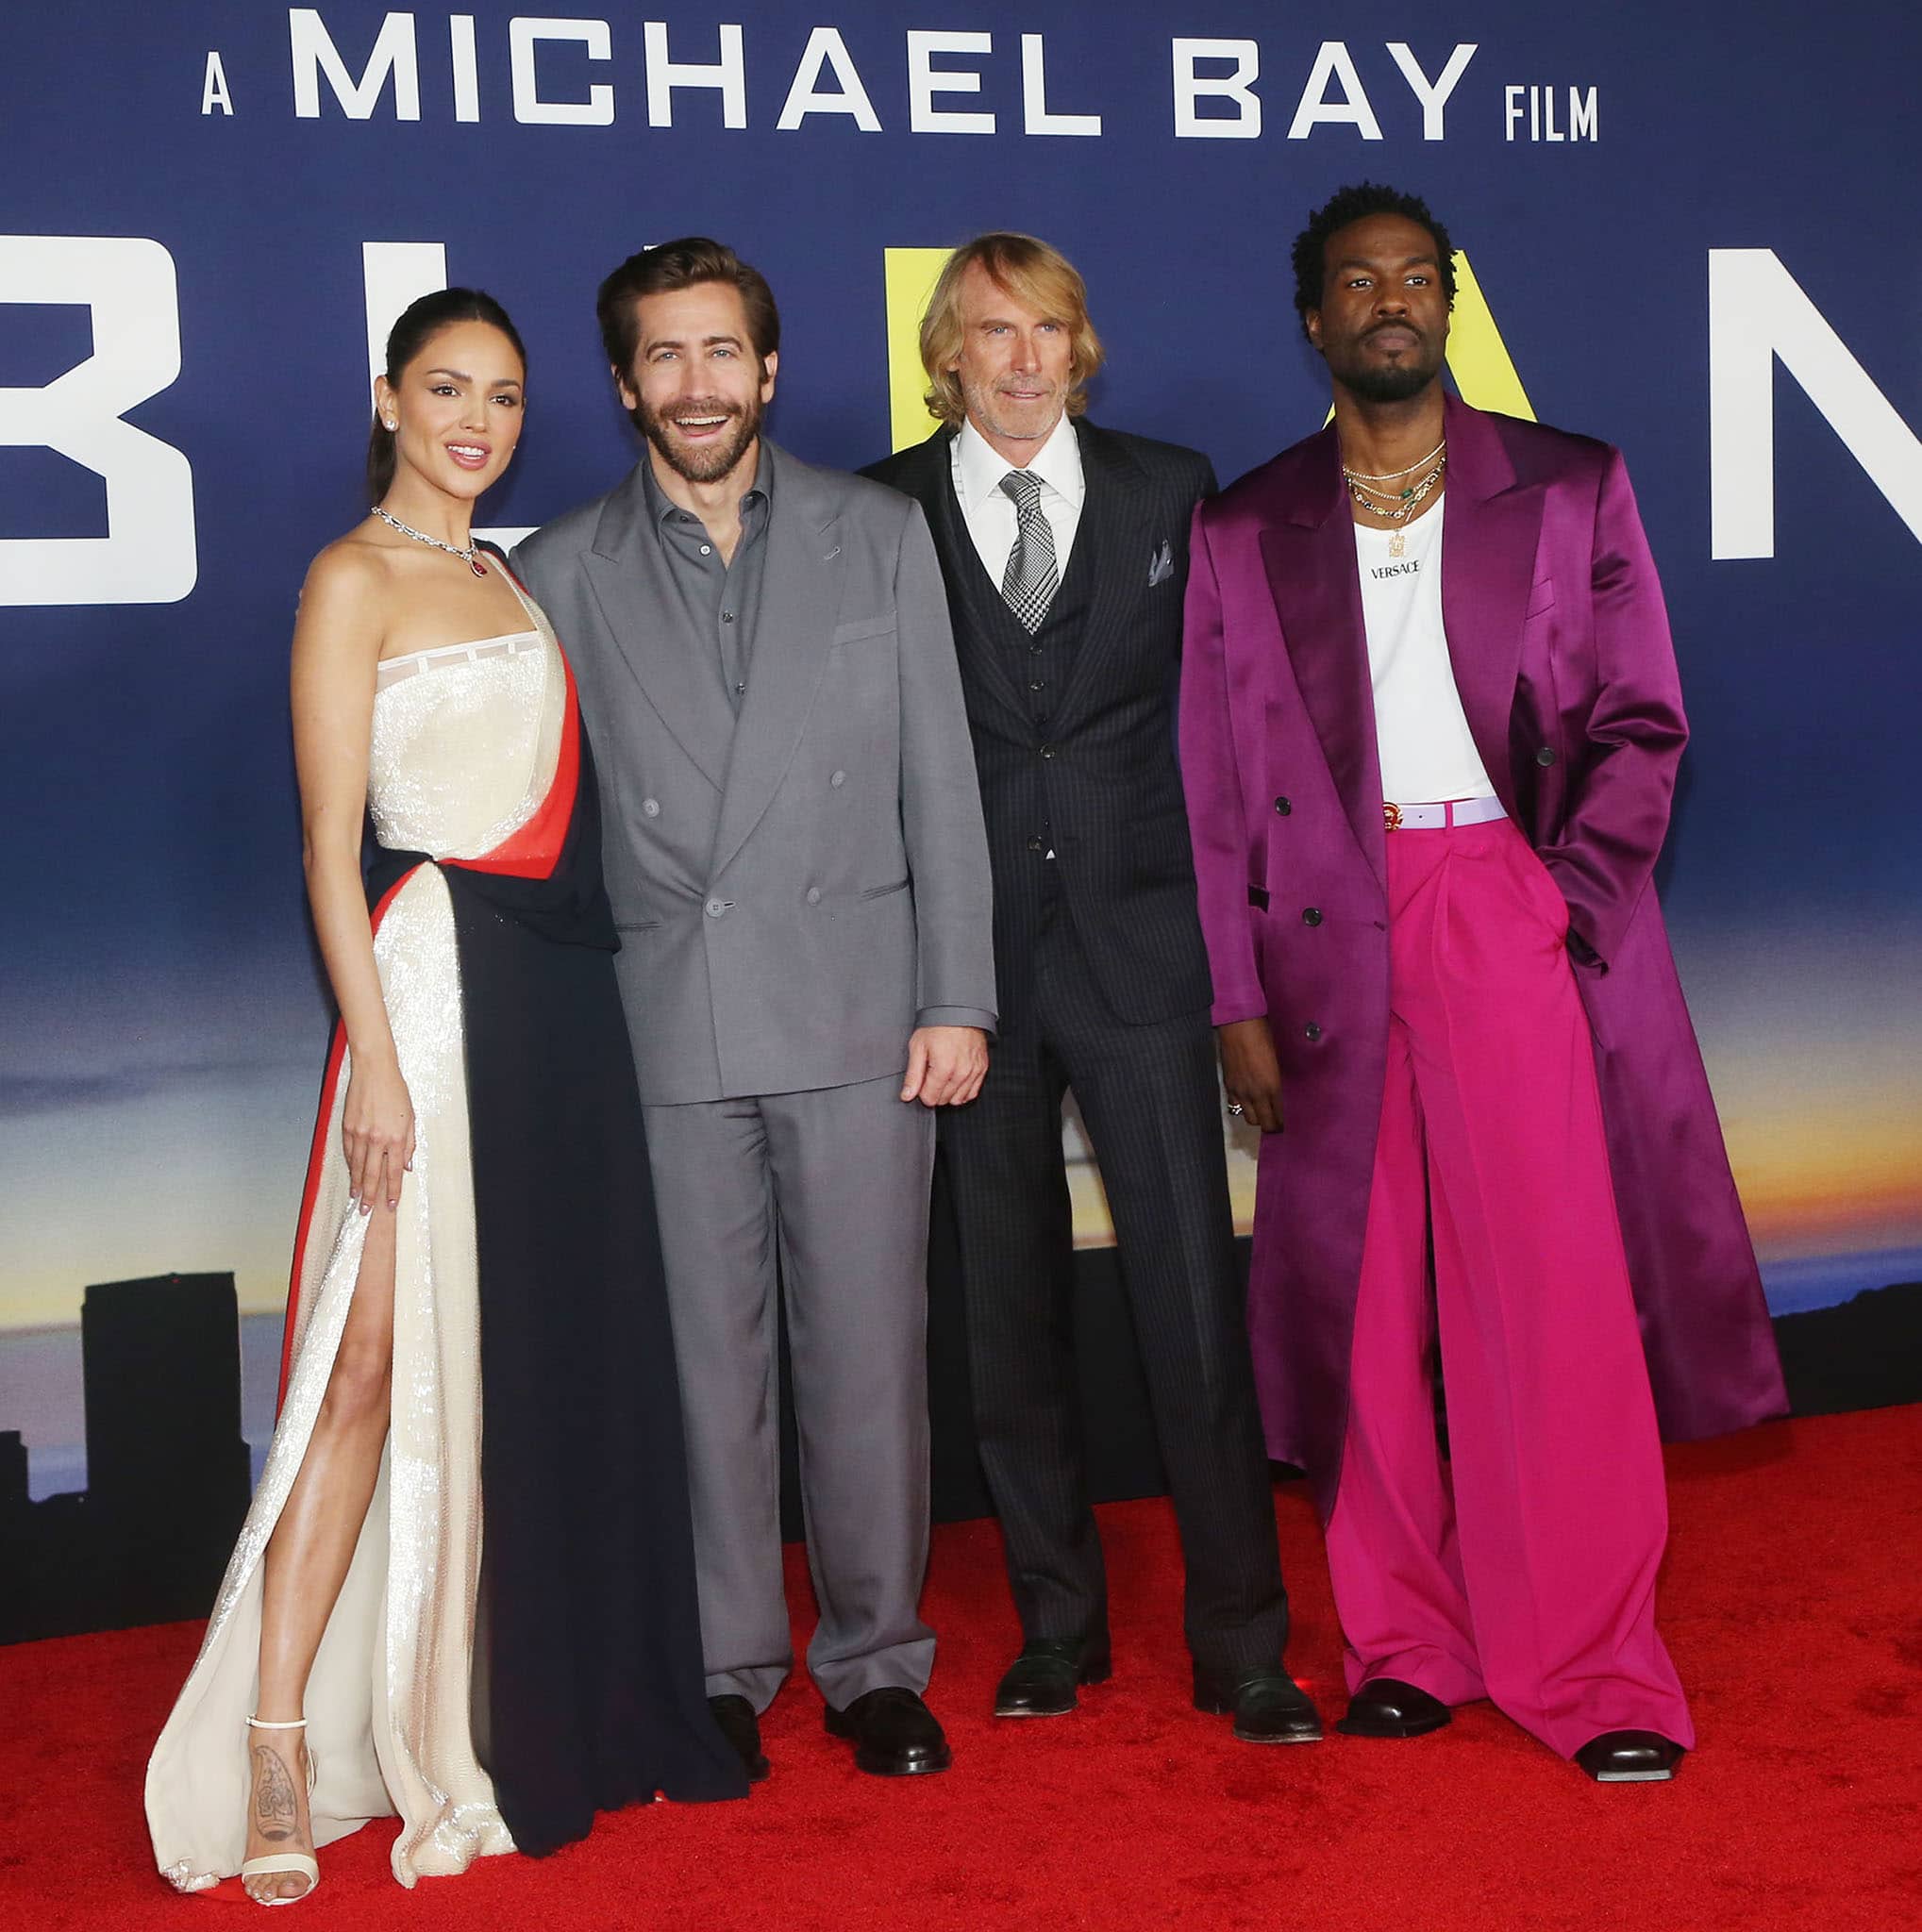 Eiza Gonzalez, Jake Gyllenhaal, Michael Bay, and Yahya Abdul-Mateen II at the Los Angeles premiere of Ambulance on April 4, 2022